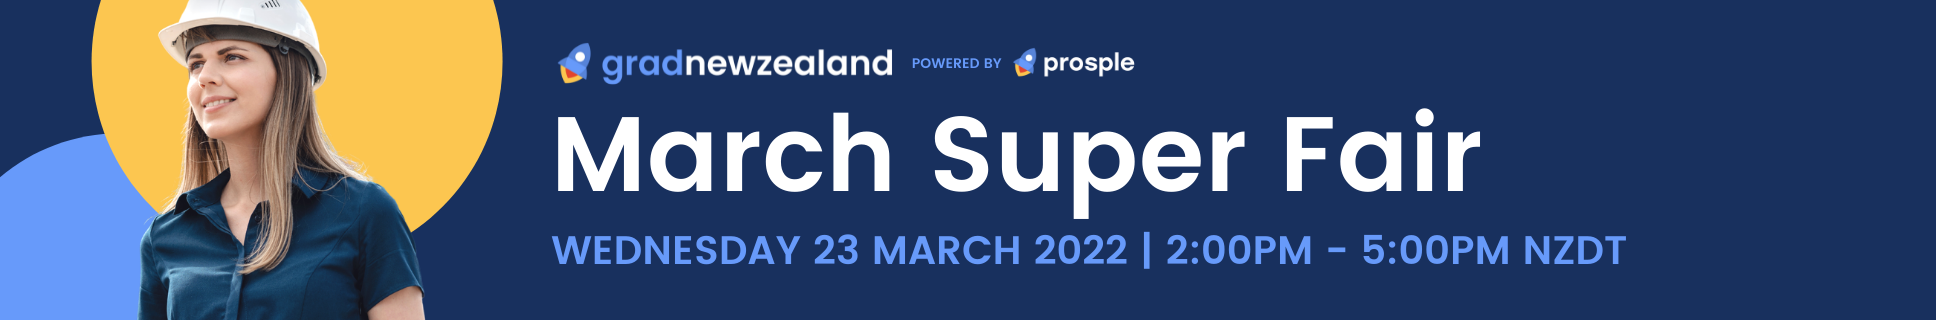 nz-march-super-fair-2022-320px (1).png 